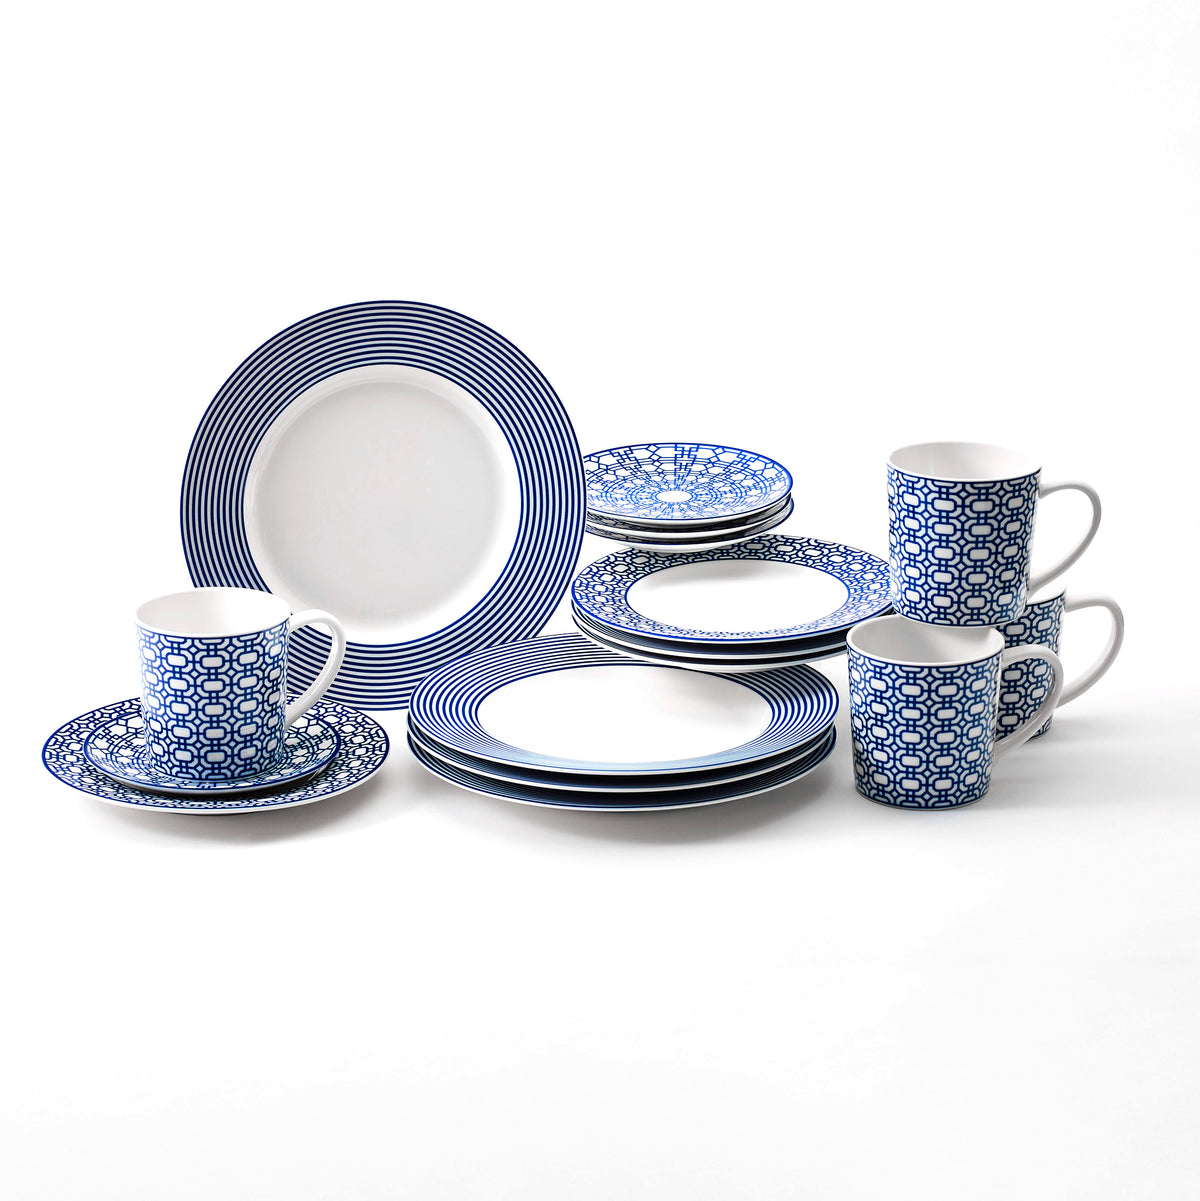 Newport Racing Stripe Geometric blue and white 16 piece dinnerware set in porcelain from Caskata